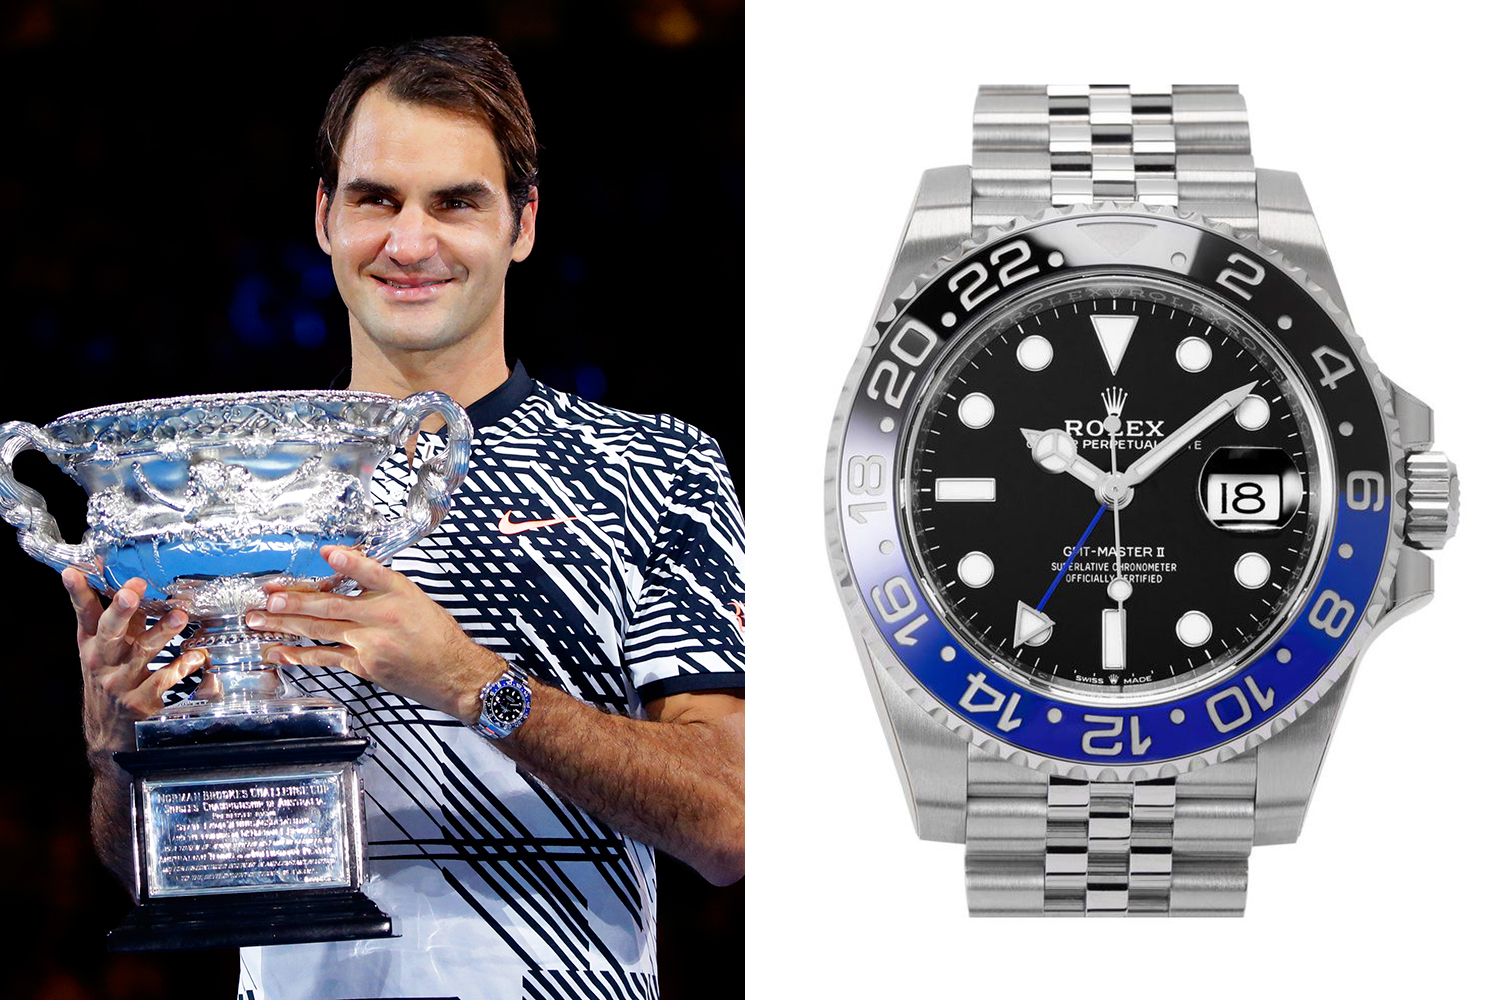   Federer trägt den GMT-Master II, der etwa 11.000 £ kostet